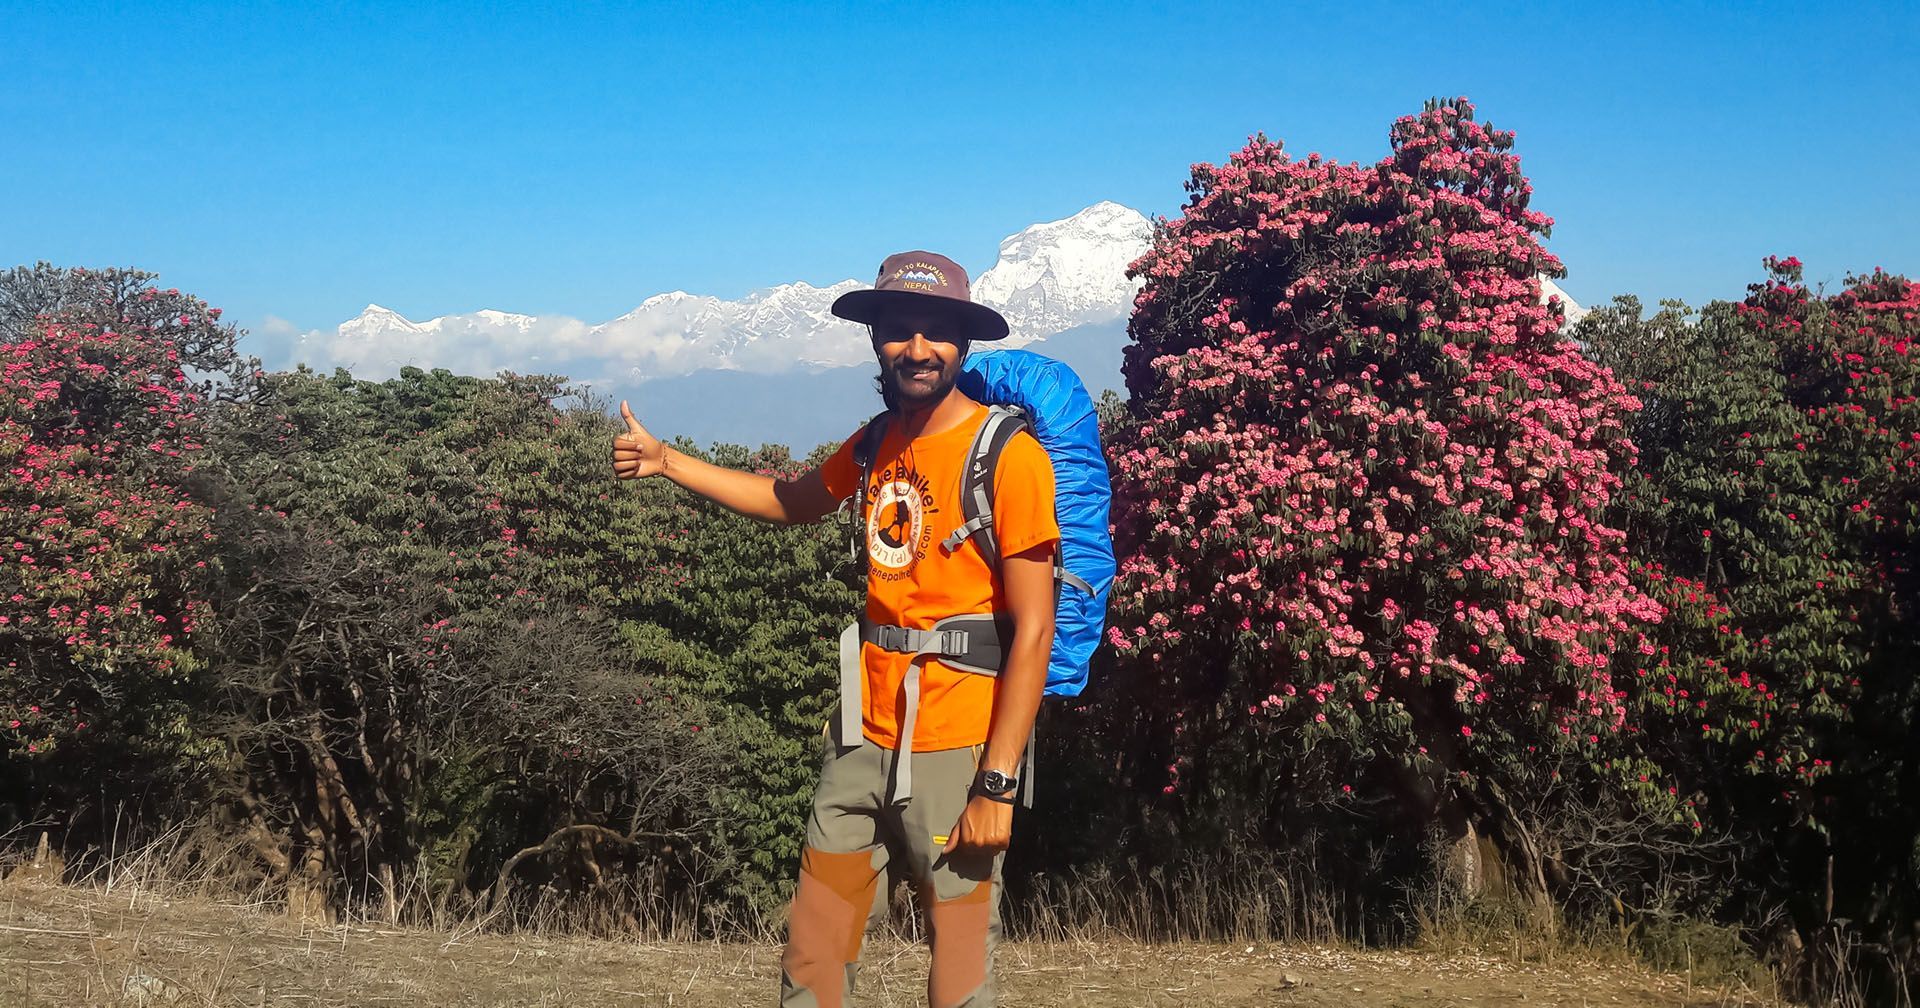 Local trekking guide on Poon Hill trek in Nepal